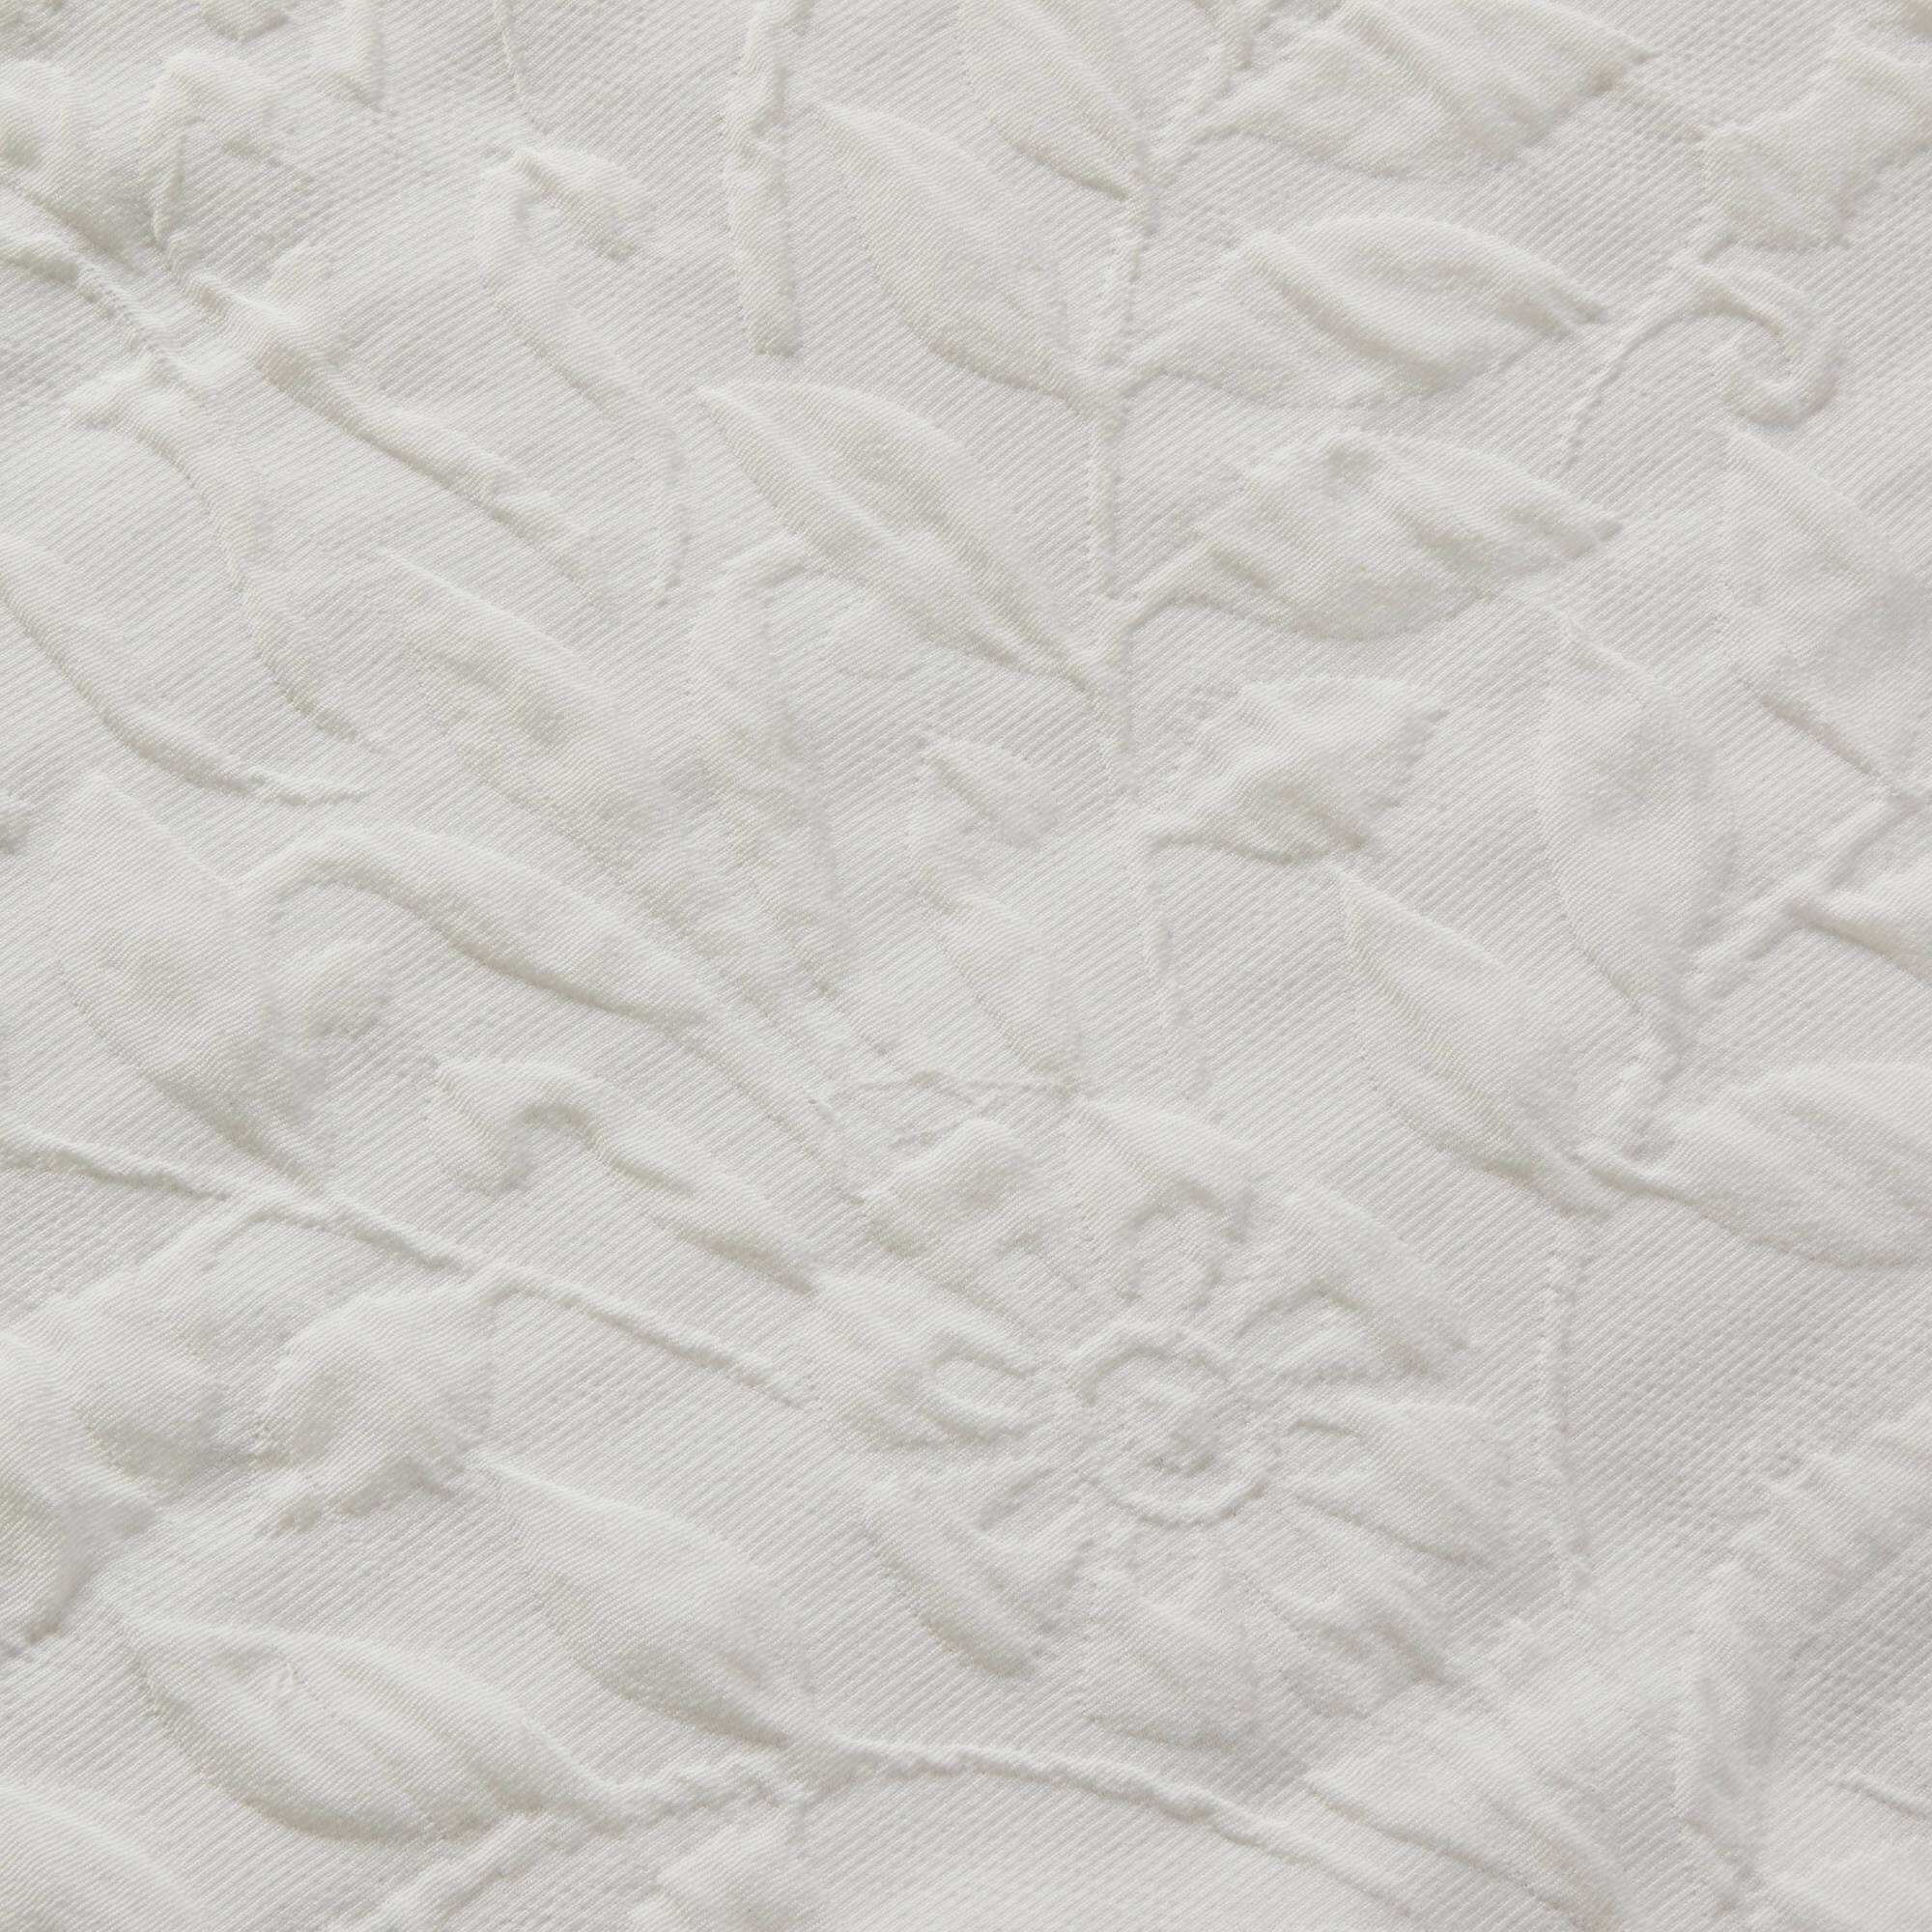 Laura Ashley Rowland Matelasse White Cotton Duvet Cover Set